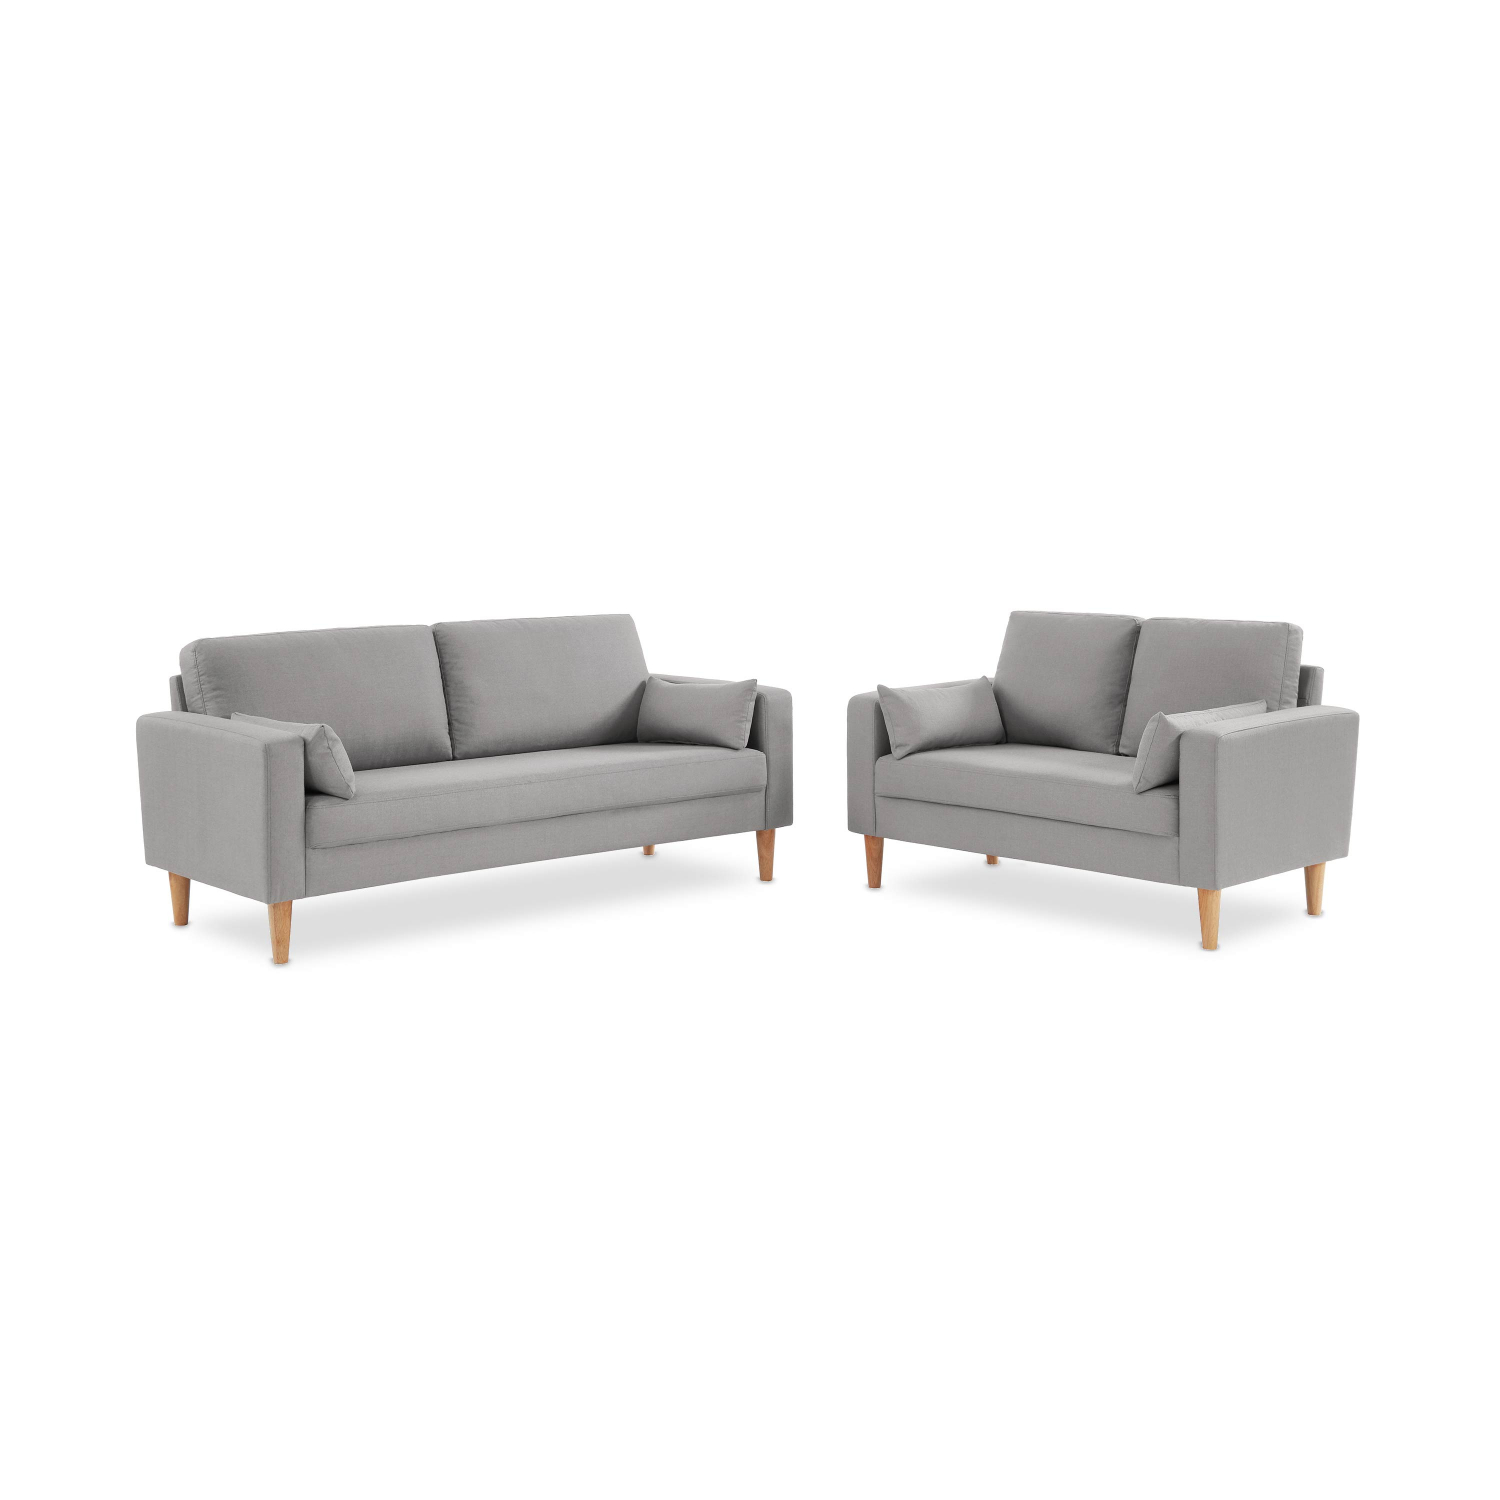 Sofa Lounge 3 Seater, Wooden Legs - BJORN - Light Grey